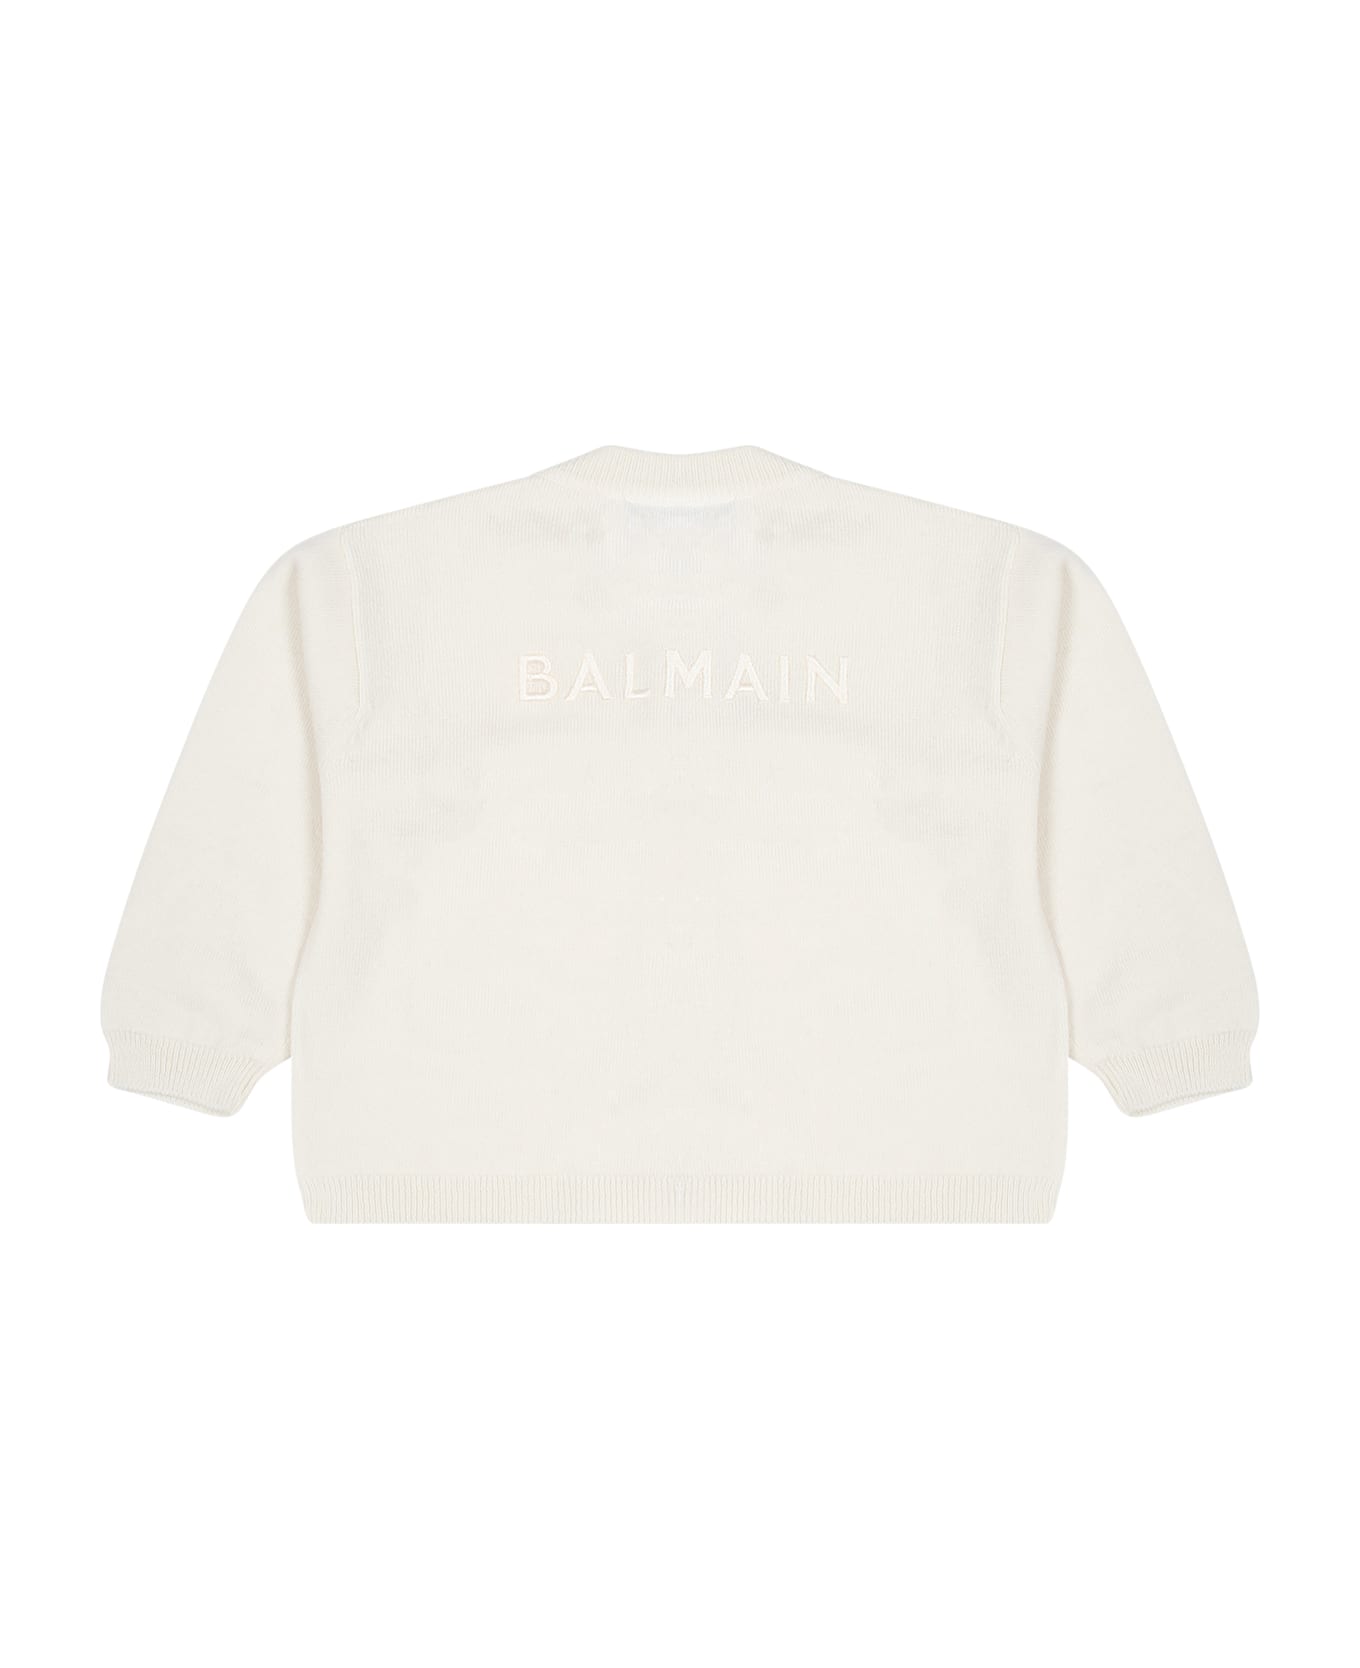 Balmain Ivory Cardigan For Baby Girl With Logo - Ivory